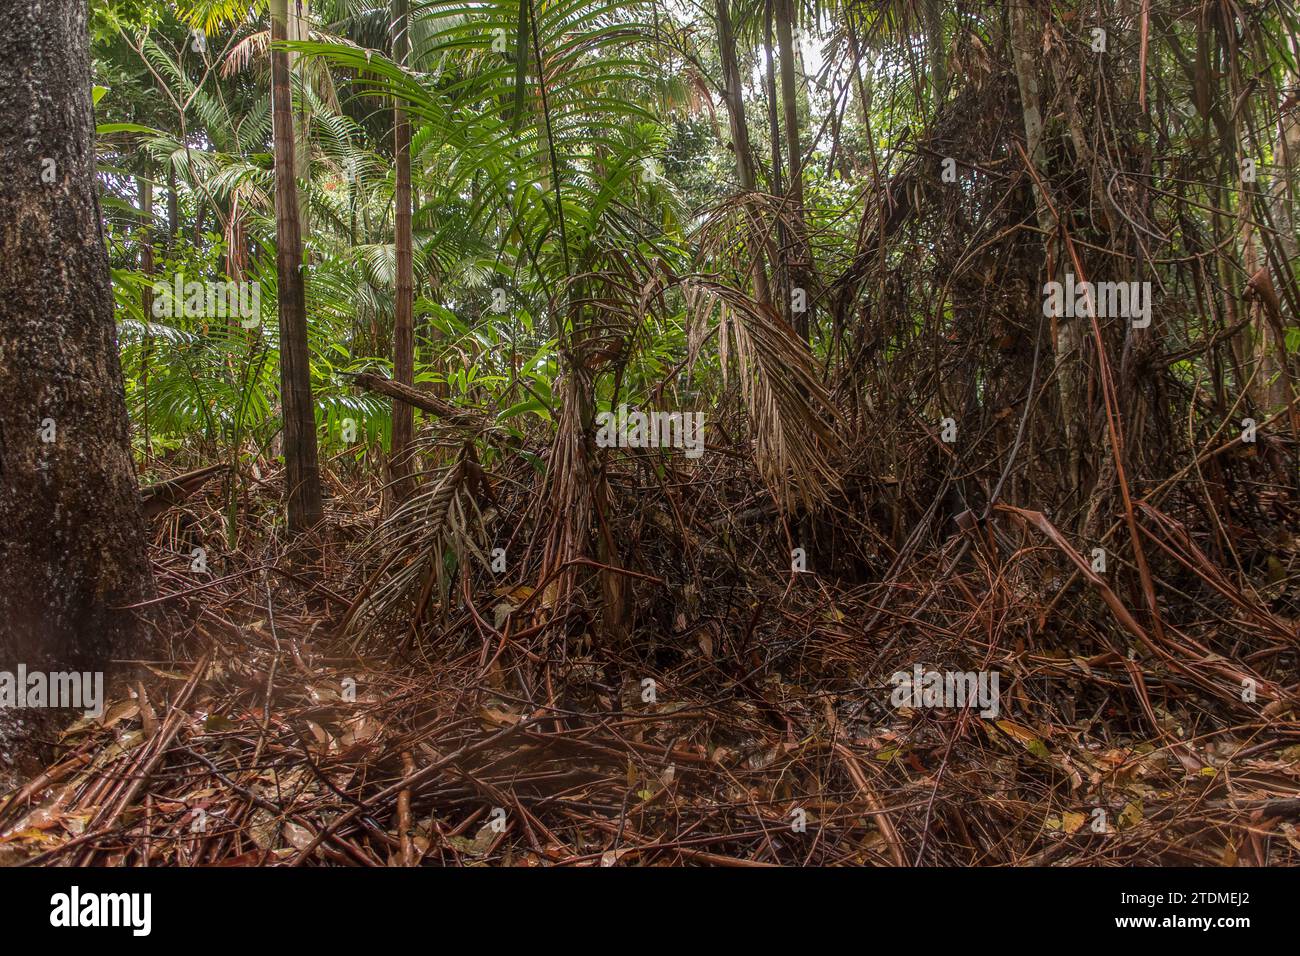 Mass of fallen vegetation and fronds on floor of lowland subtropical rainforest, Queensland, Australia. Bangalow palms, springtime after rain. Stock Photo